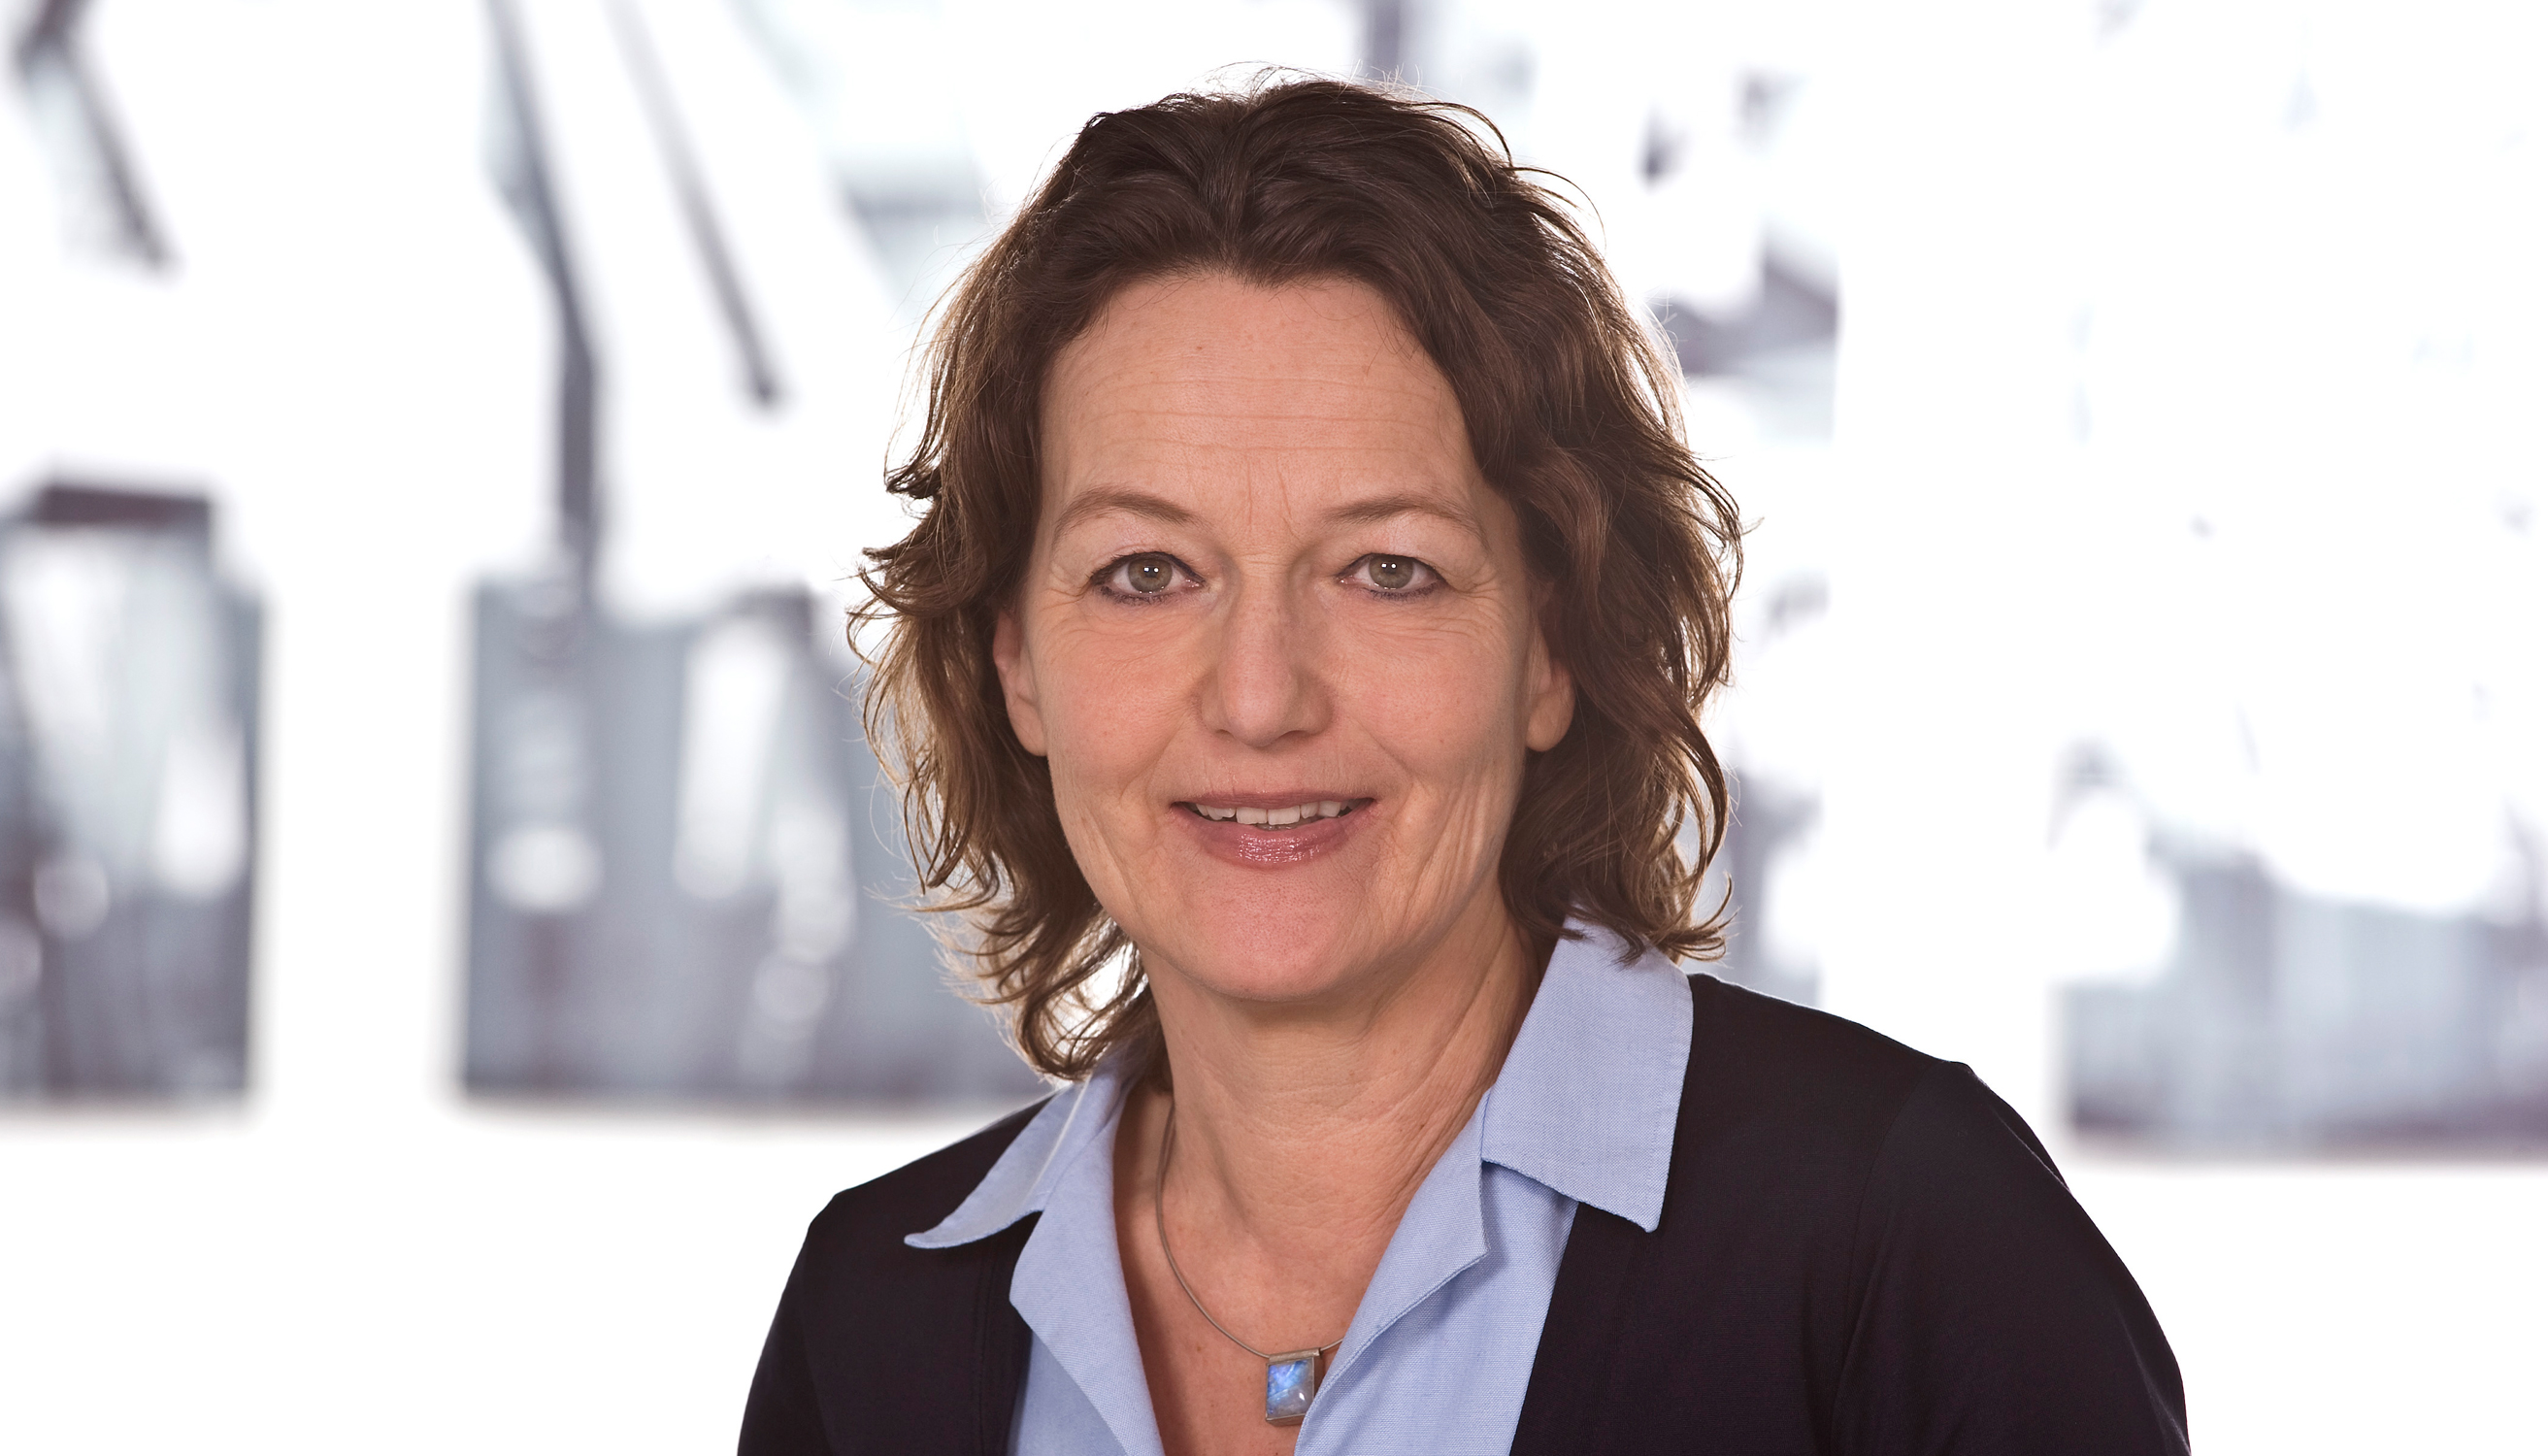 Prof. Dr. Sabine Kurtenbach Is the New GIGA President (ad interim)